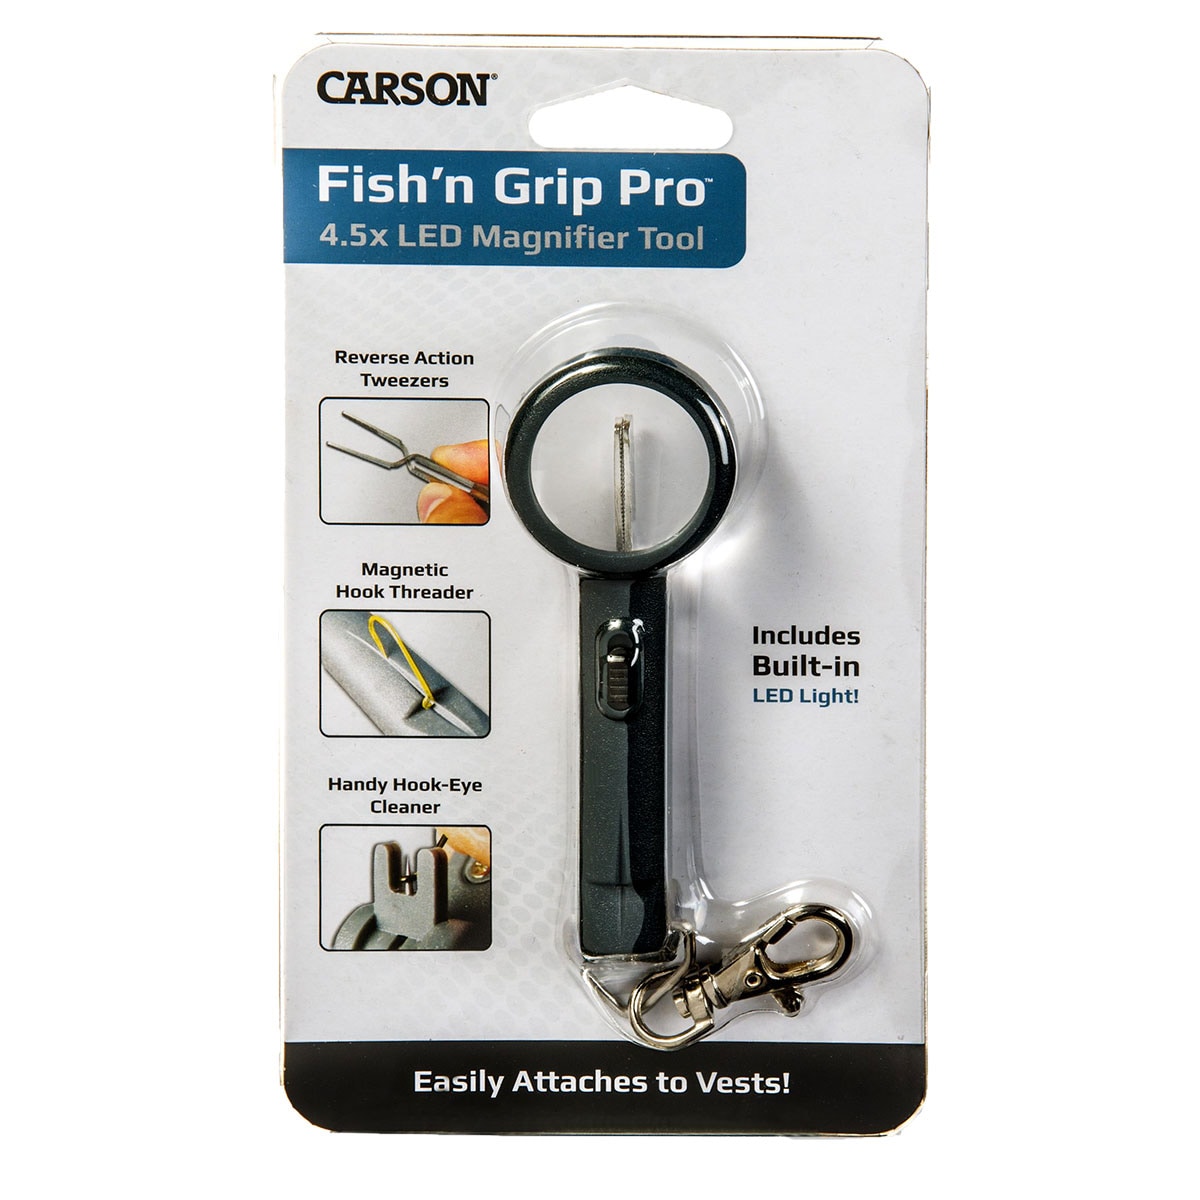 Lupa Carson Fish'n Grip Pro 4.5x